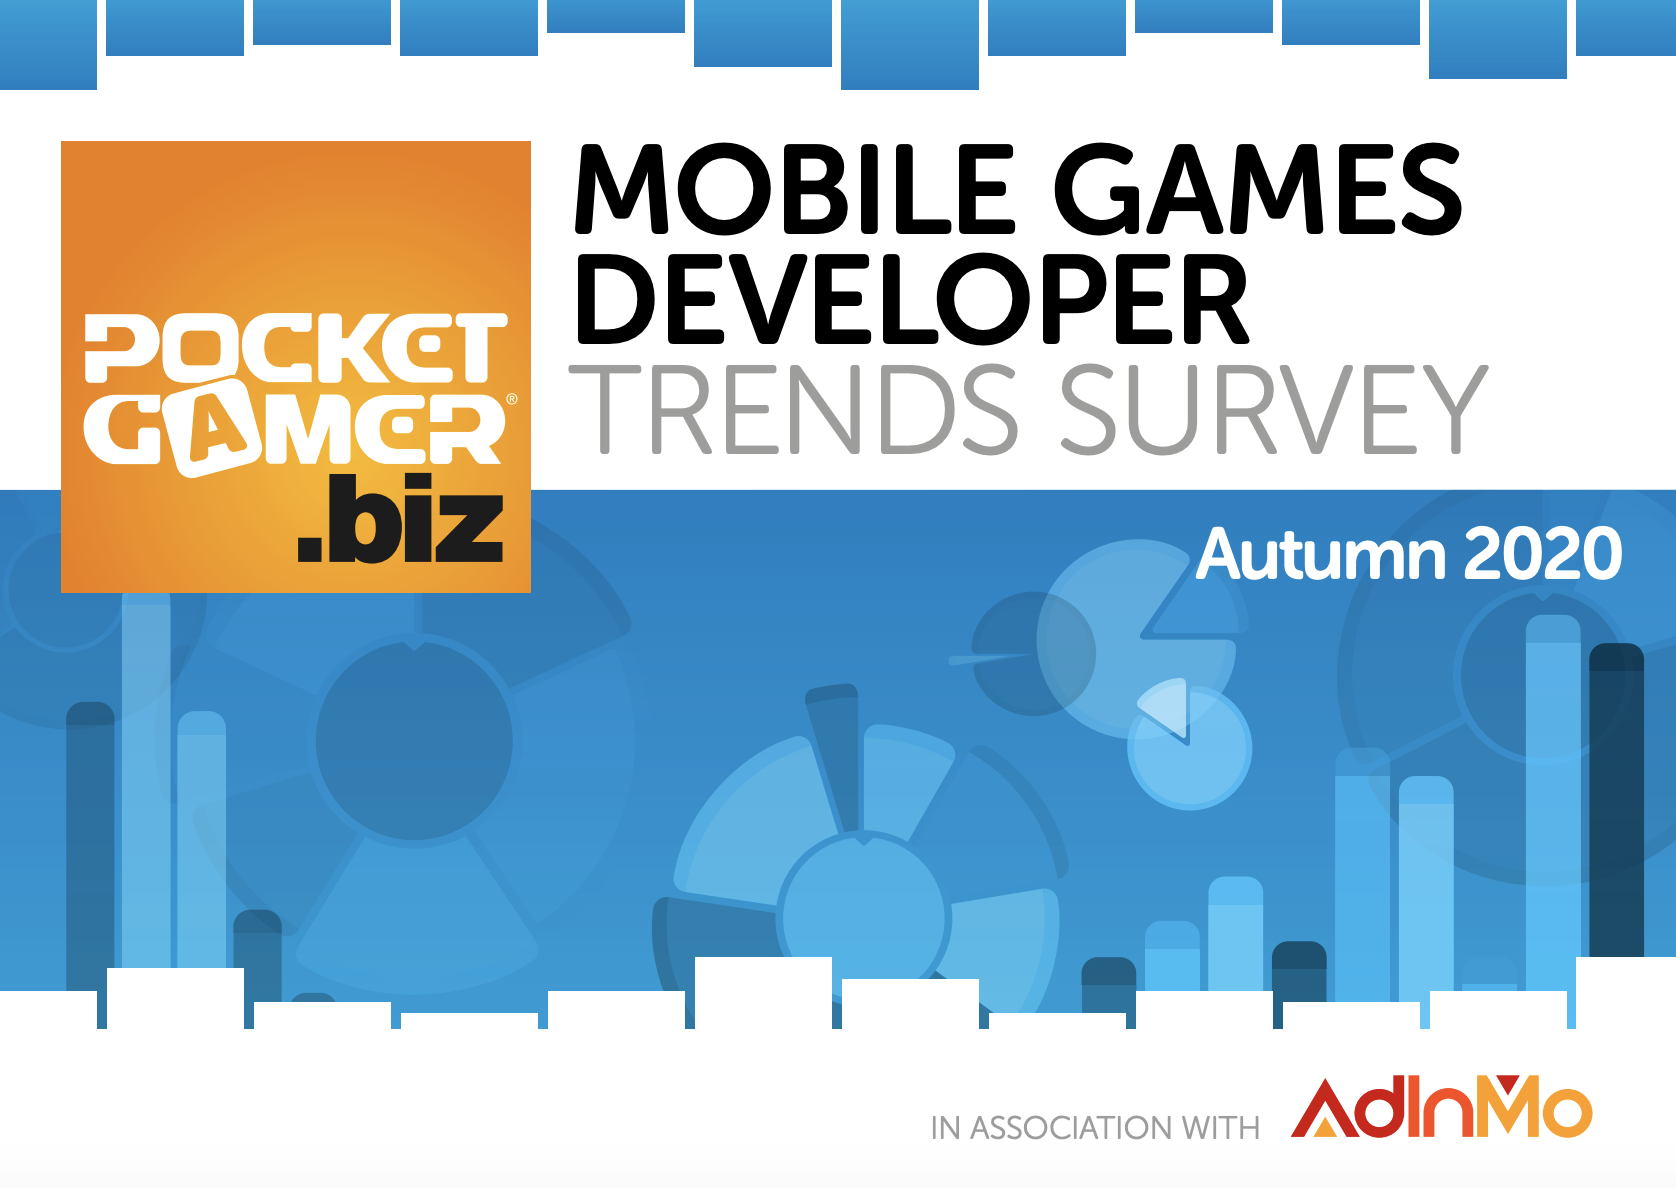 Mobile Games Developer Trends Survey 2020: 10 key takeaways